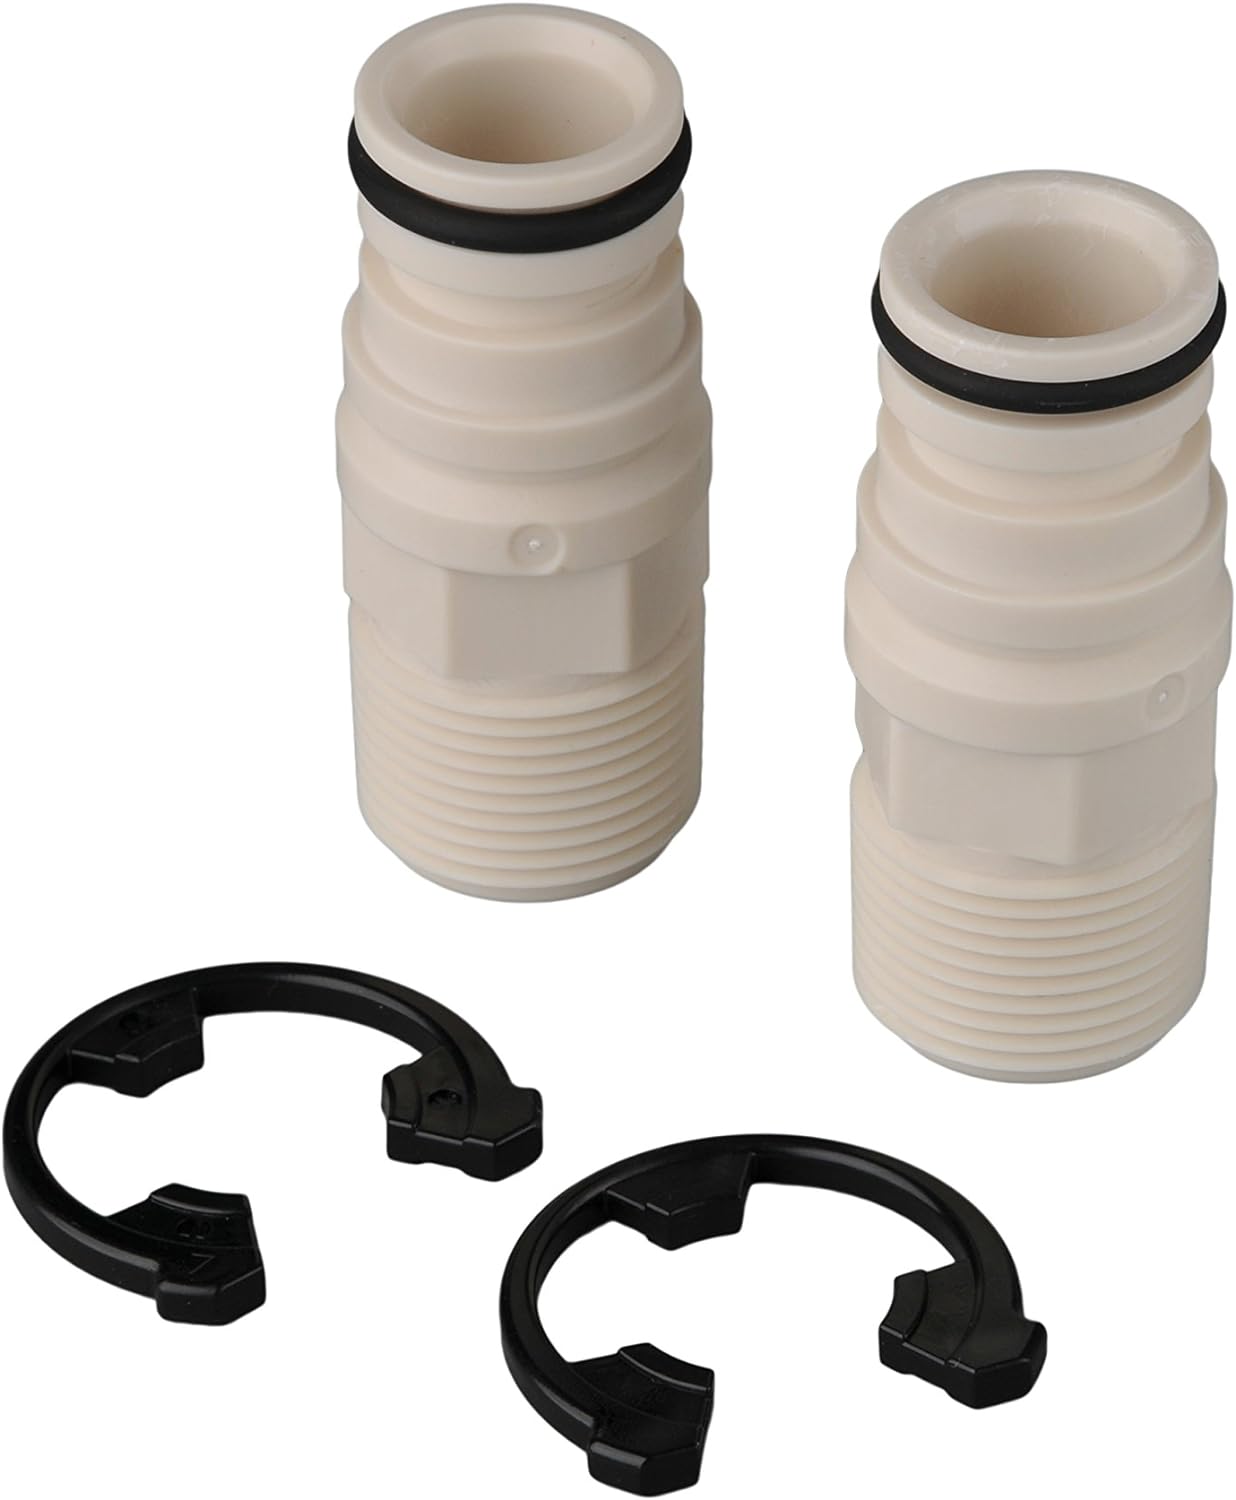 Ecodyne Water Softener Standard Install Adaptor Kit - Part # 7280203